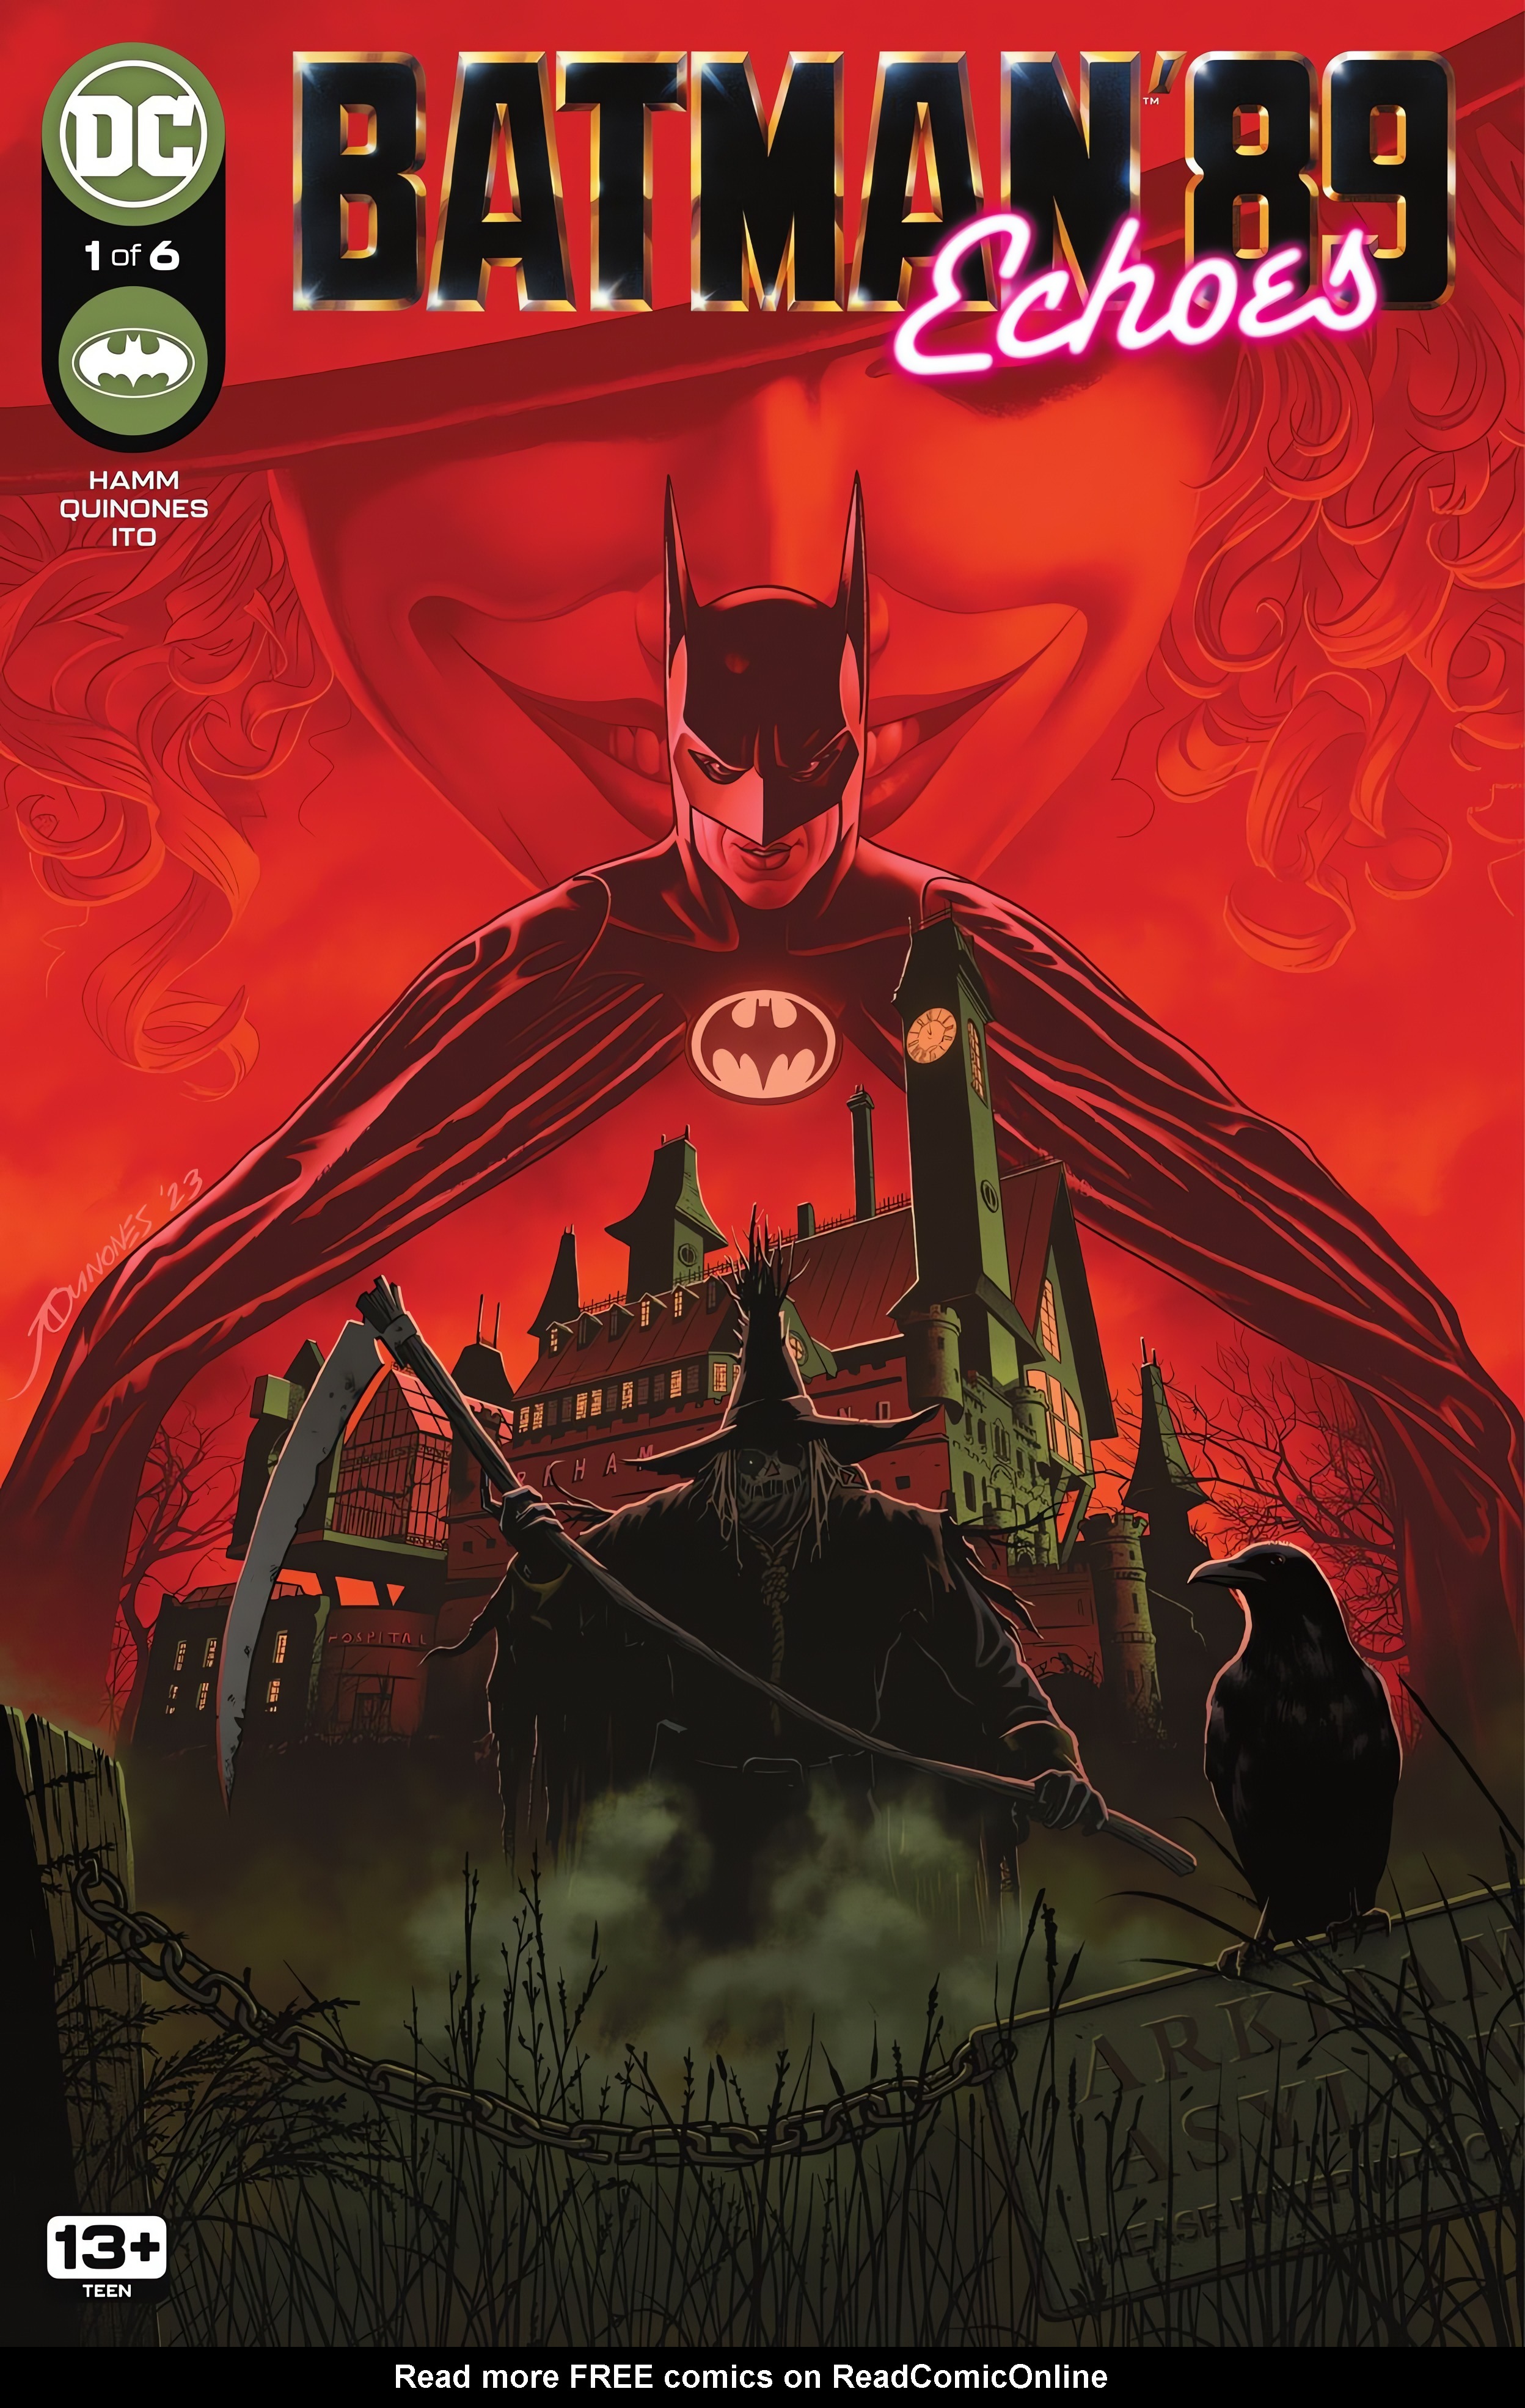 Read online Batman '89: Echoes comic -  Issue #1 - 1